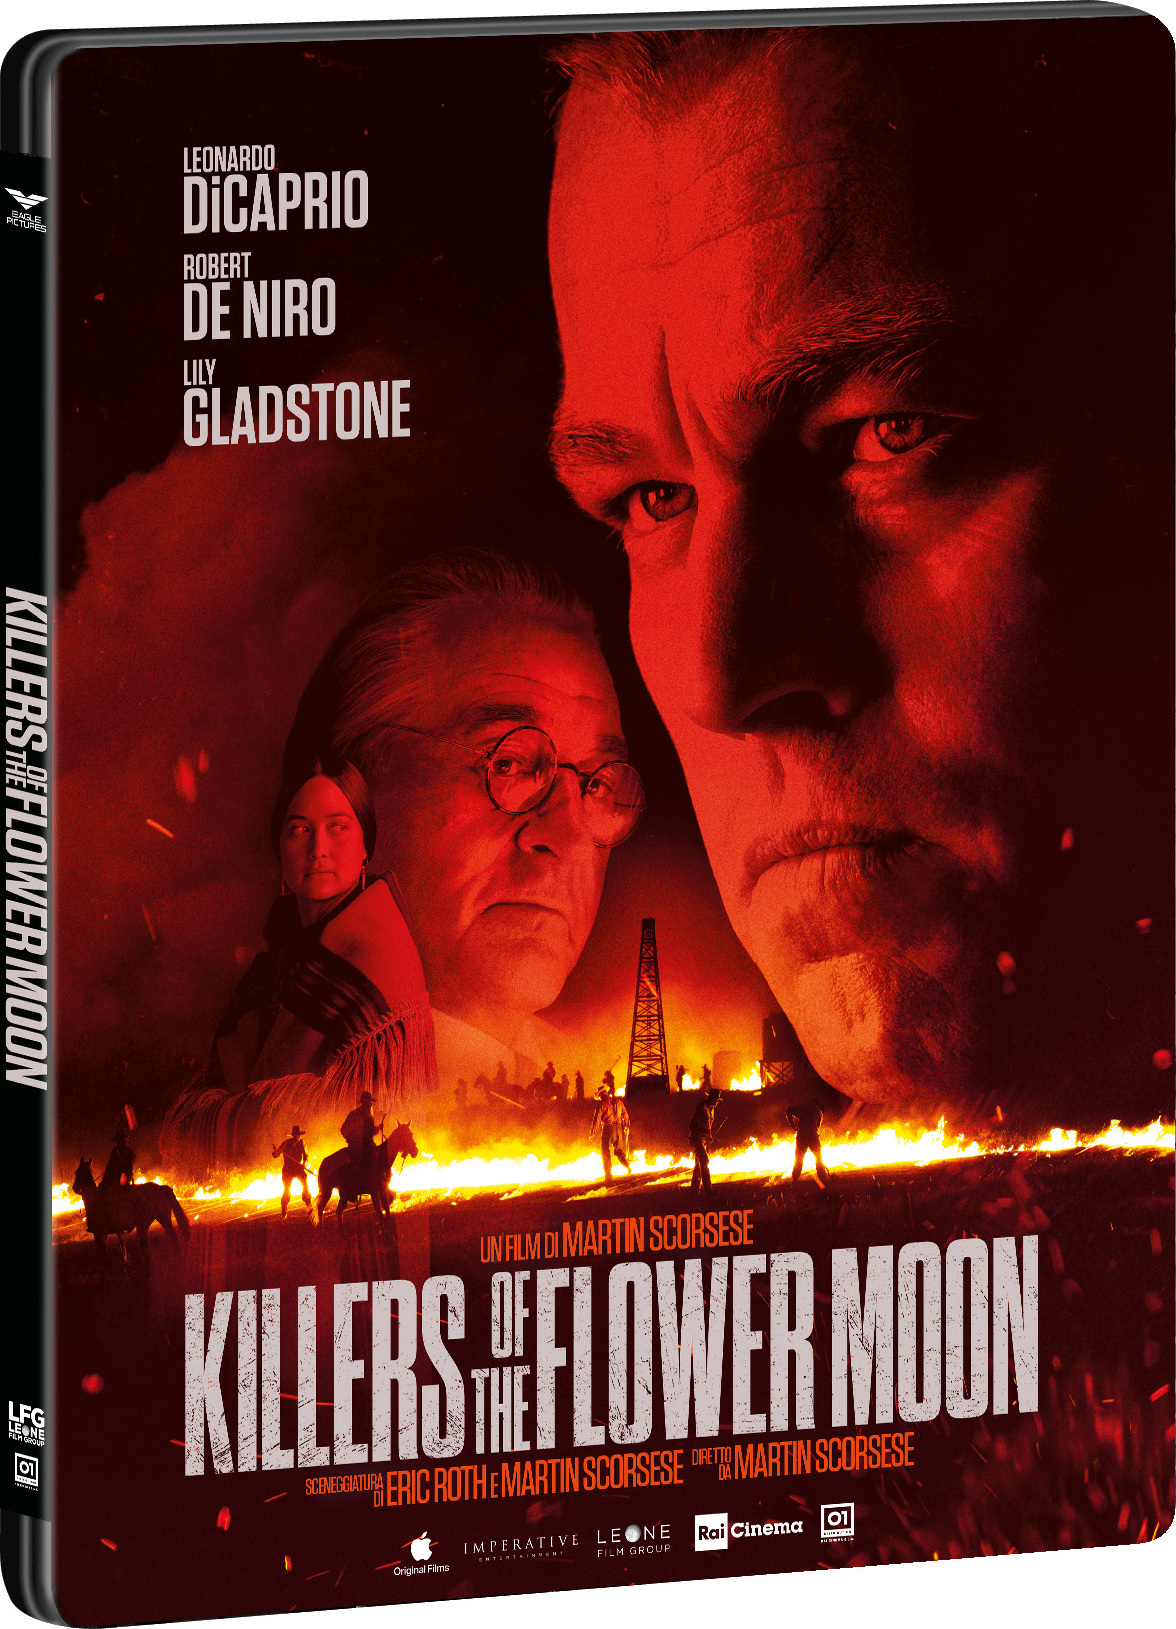 Killers of the Flower Moon 4K Blu-ray (4K Ultra HD + Blu-ray) (Italy)